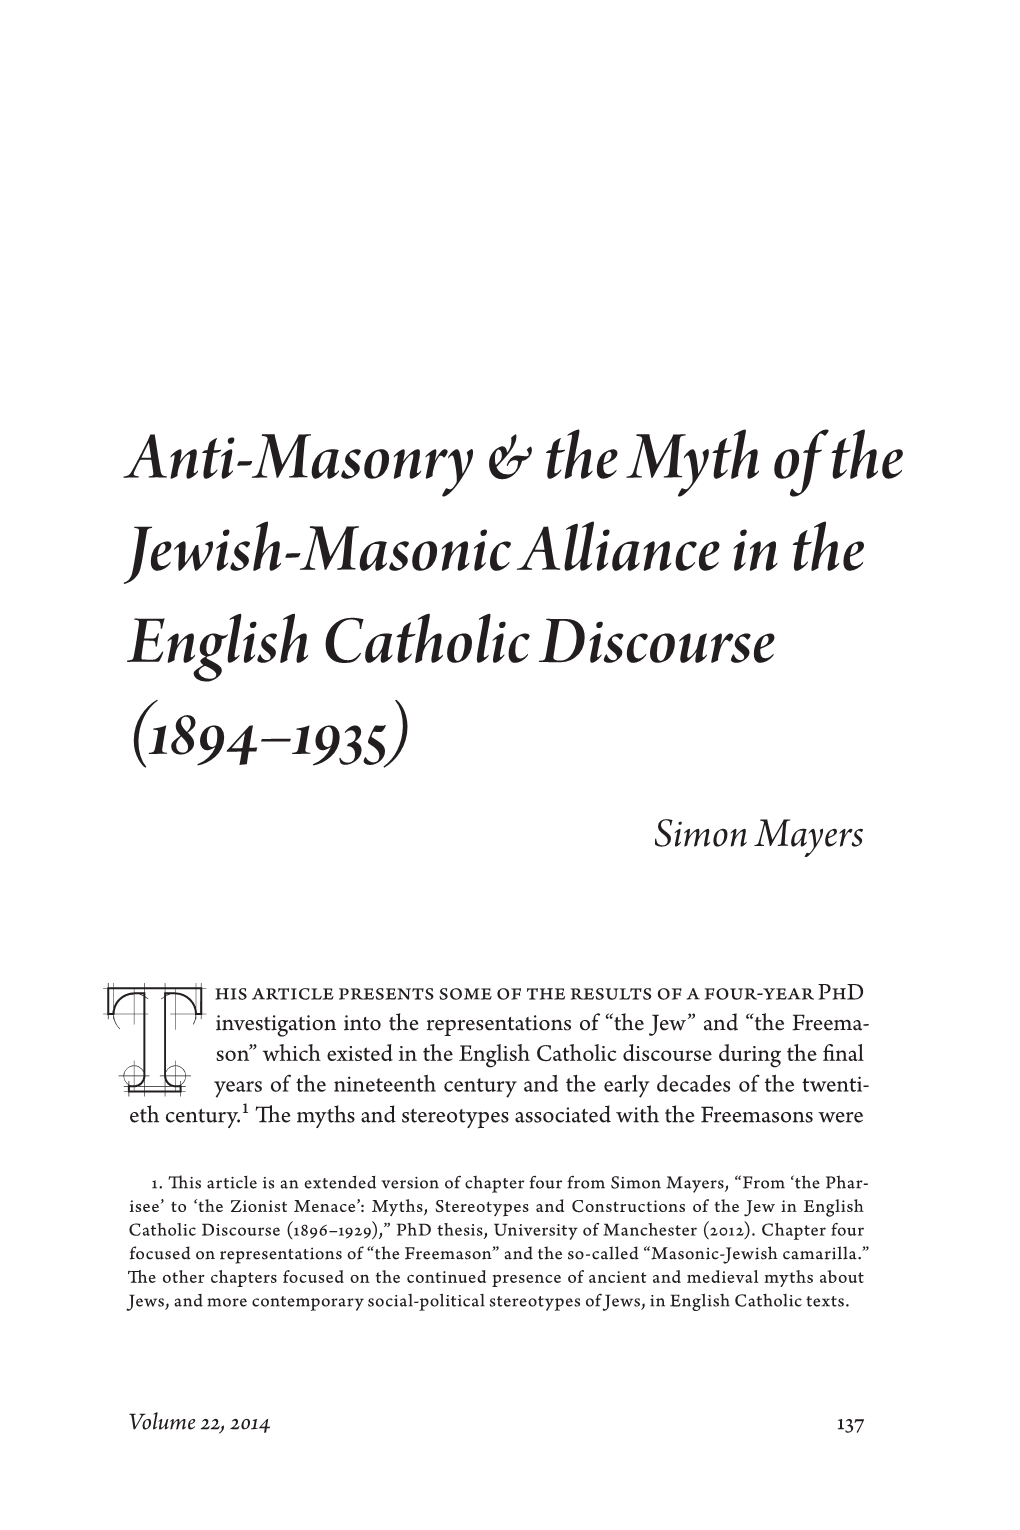 Anti-Masonry & the Myth of the Jewish-Masonic Alliance in The